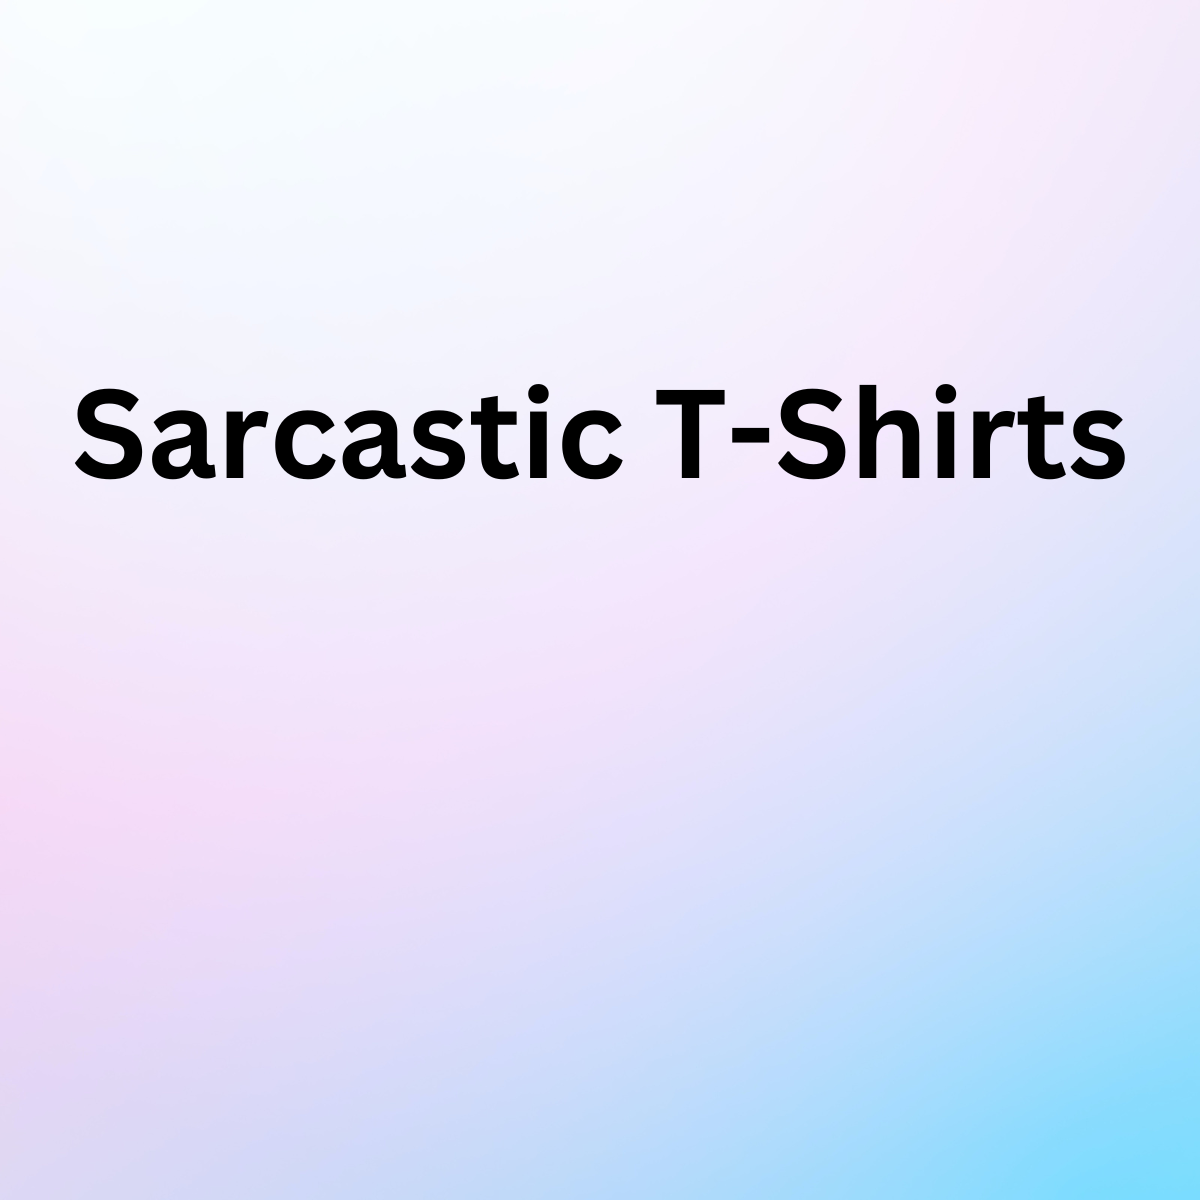 Sarcastic T-Shirts